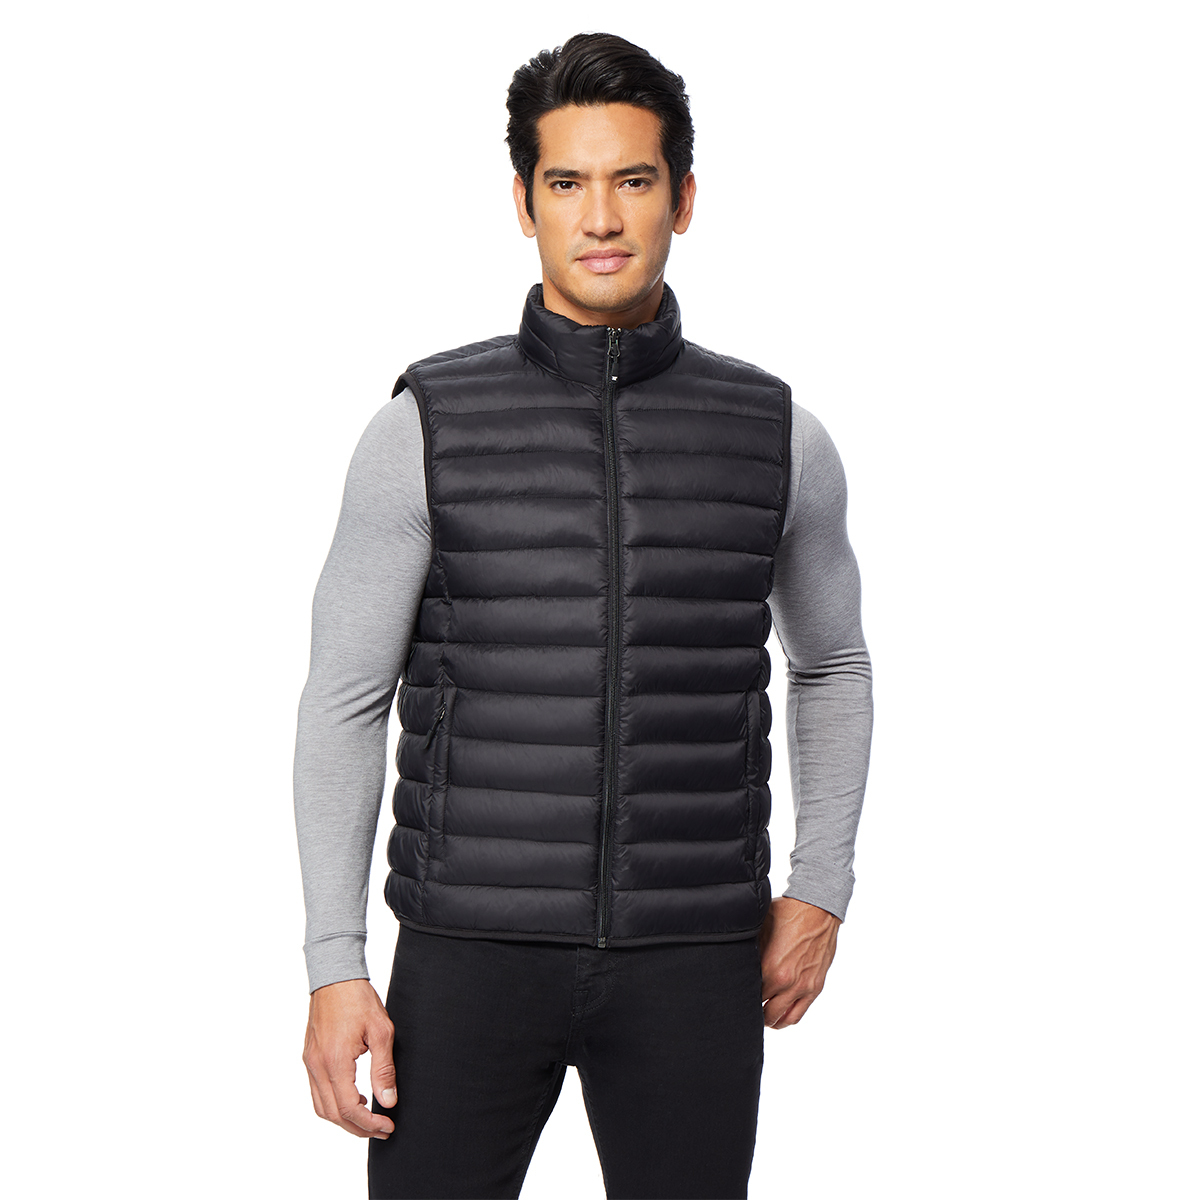 Sale > 32 degrees men's vest costco > in stock